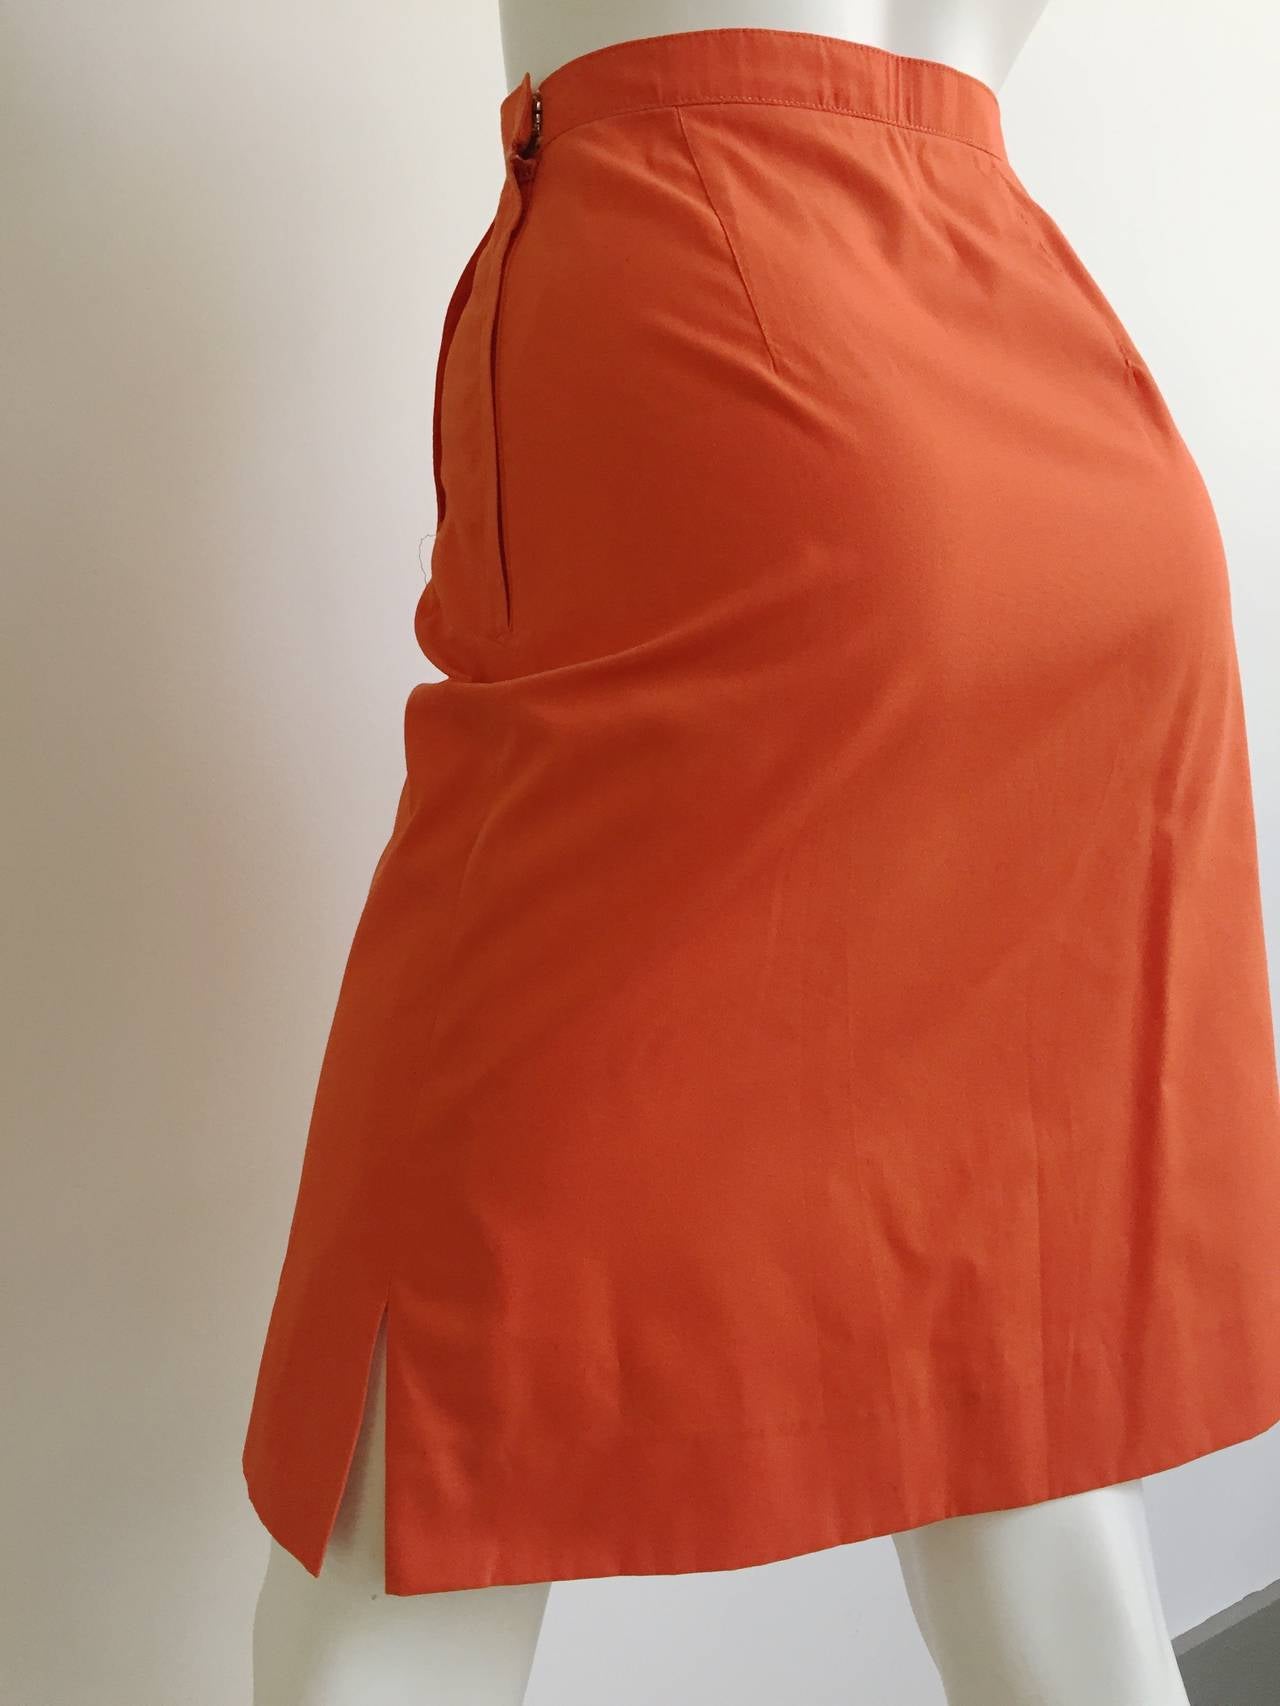 Courreges Orange Cotton Skirt With Pockets  2